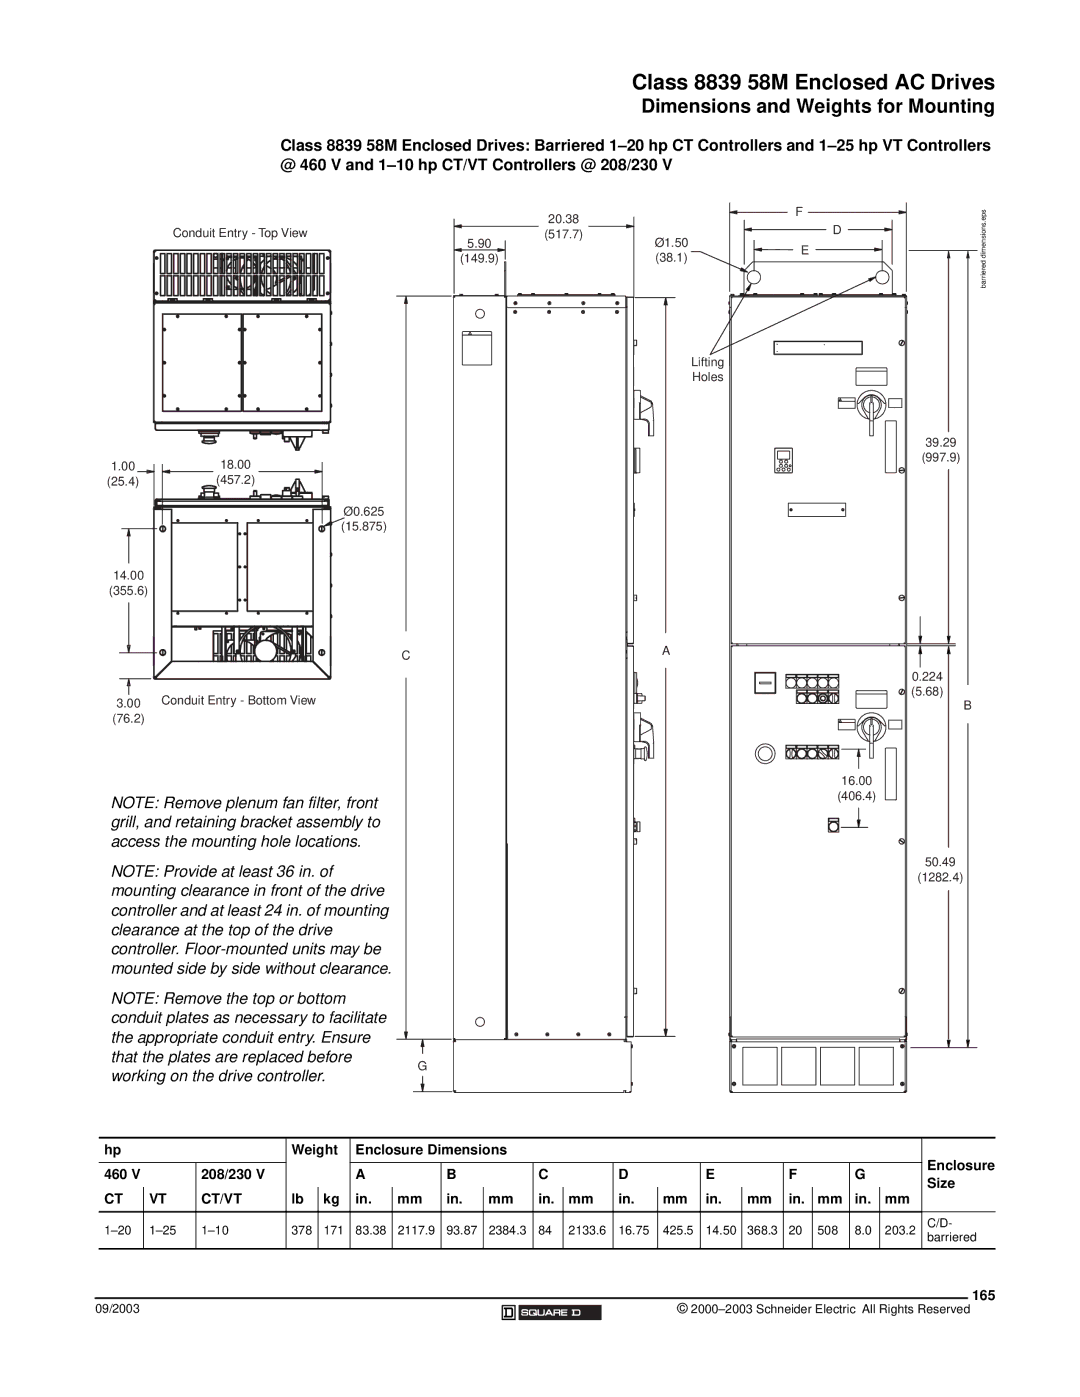 Schneider Electric 58 TRX manual 460 208/230 Size, 165 